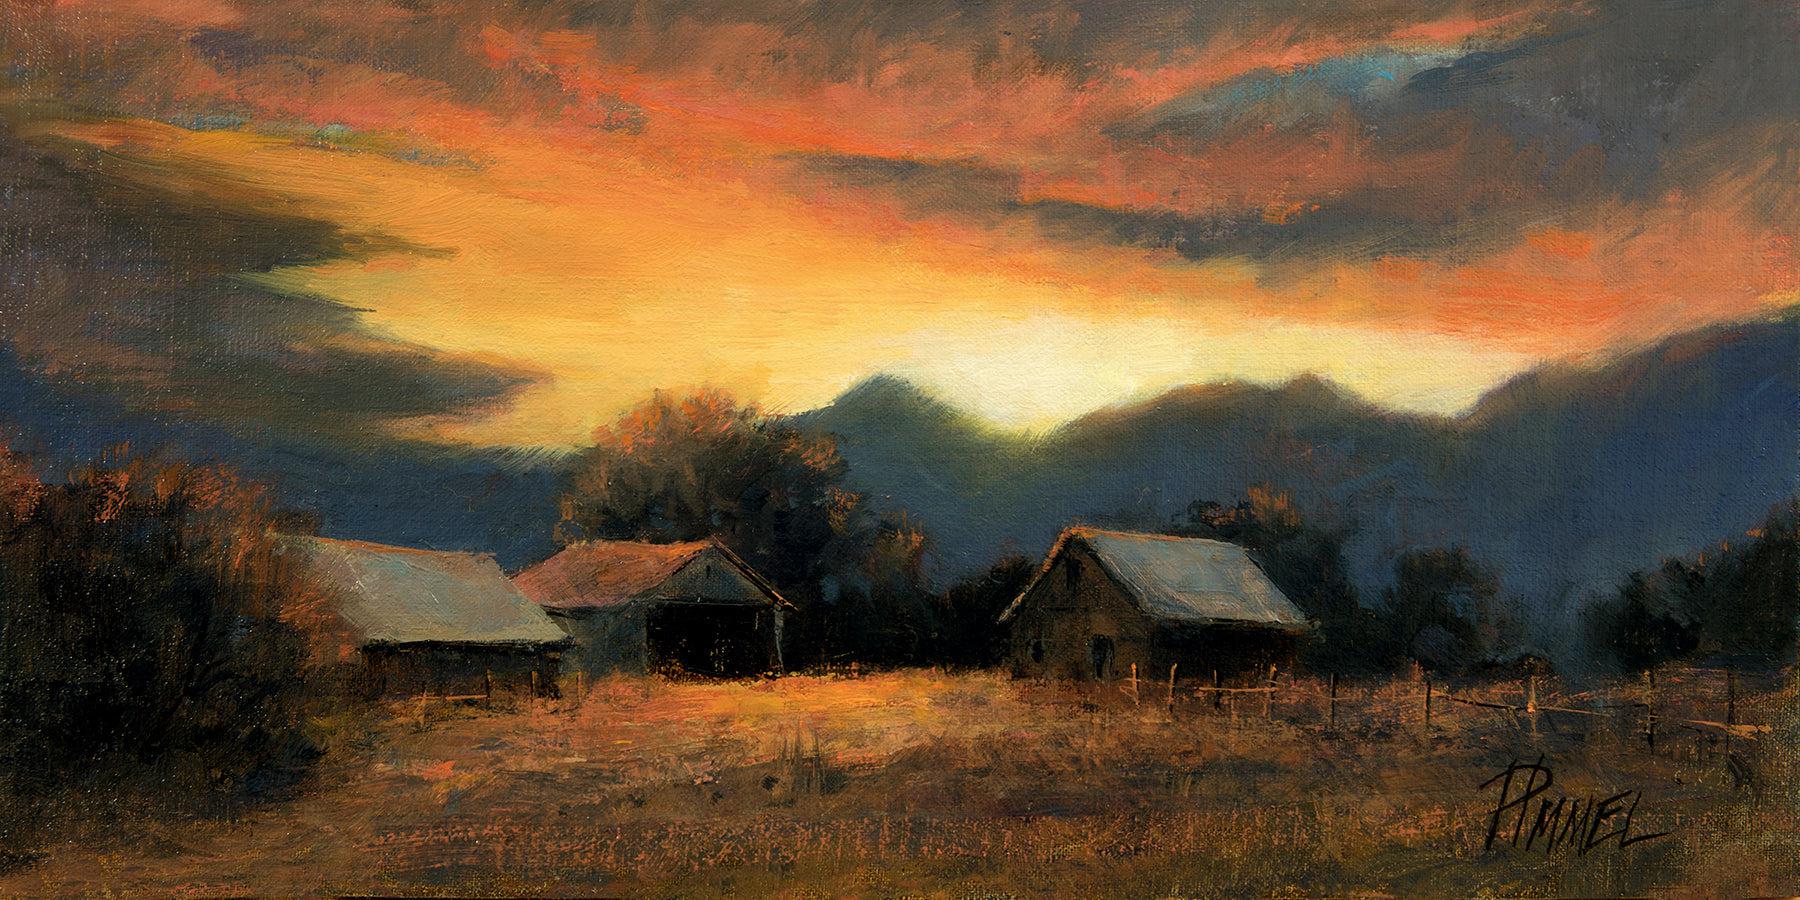 Five O'Clock Sundown-Painting-Peggy Immel-Sorrel Sky Gallery